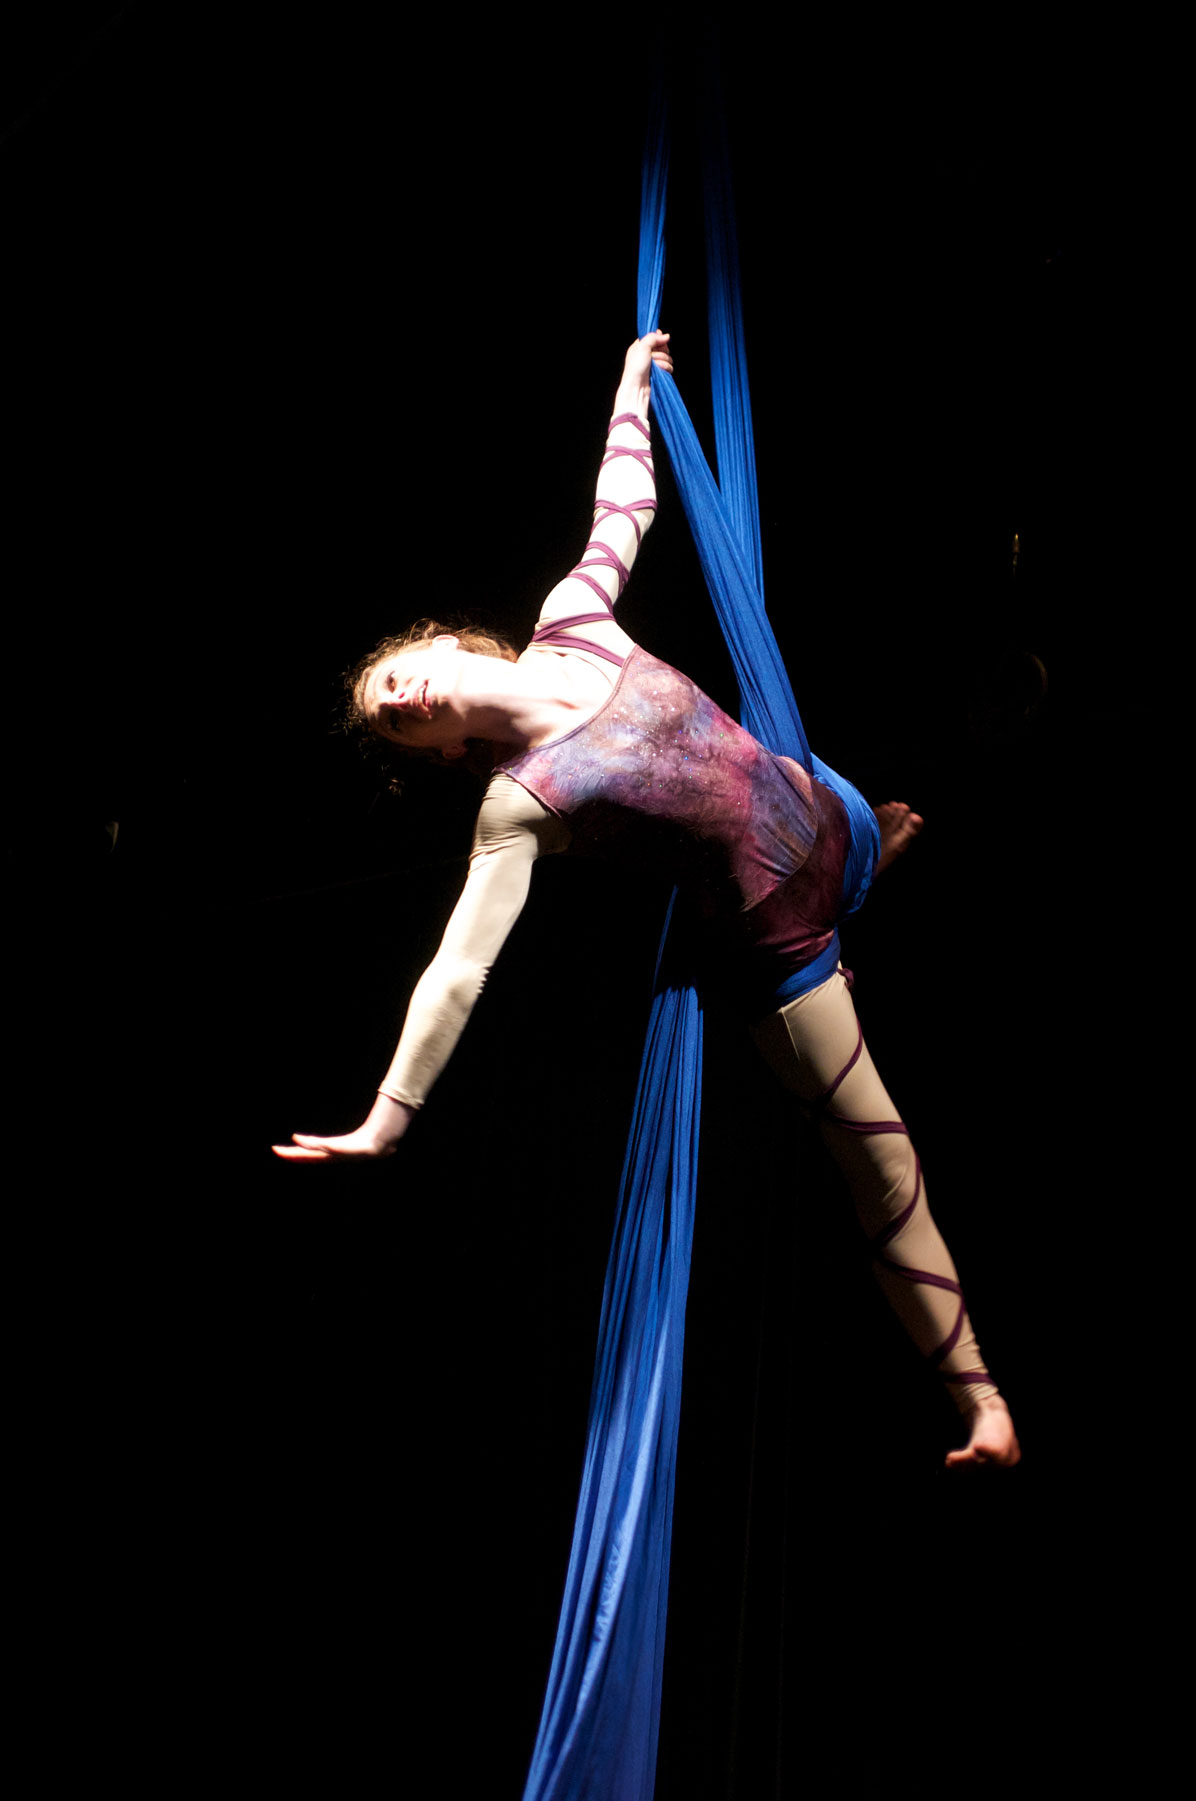 a performer on aerial silks